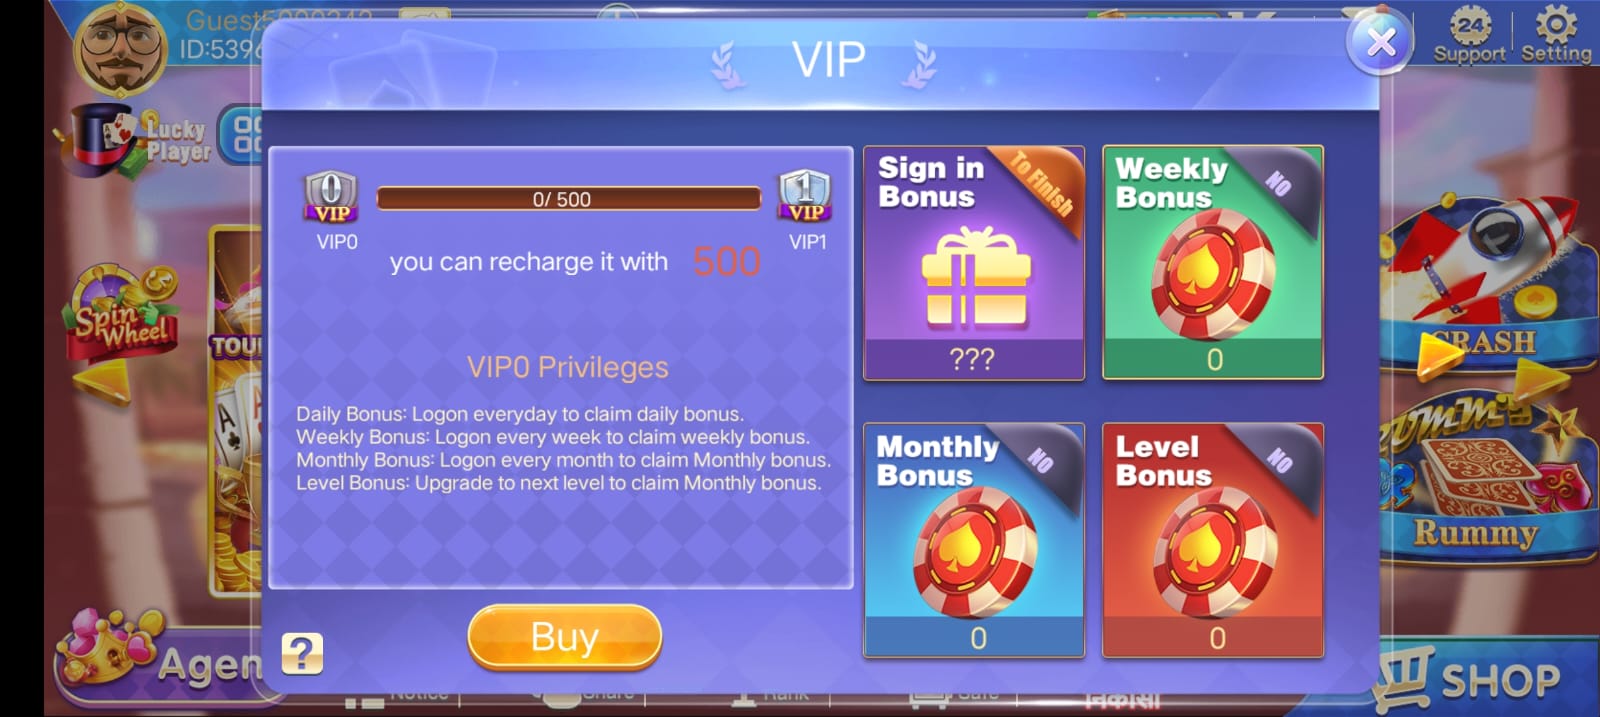 VIP Bonus Program In Teen Patti Party App